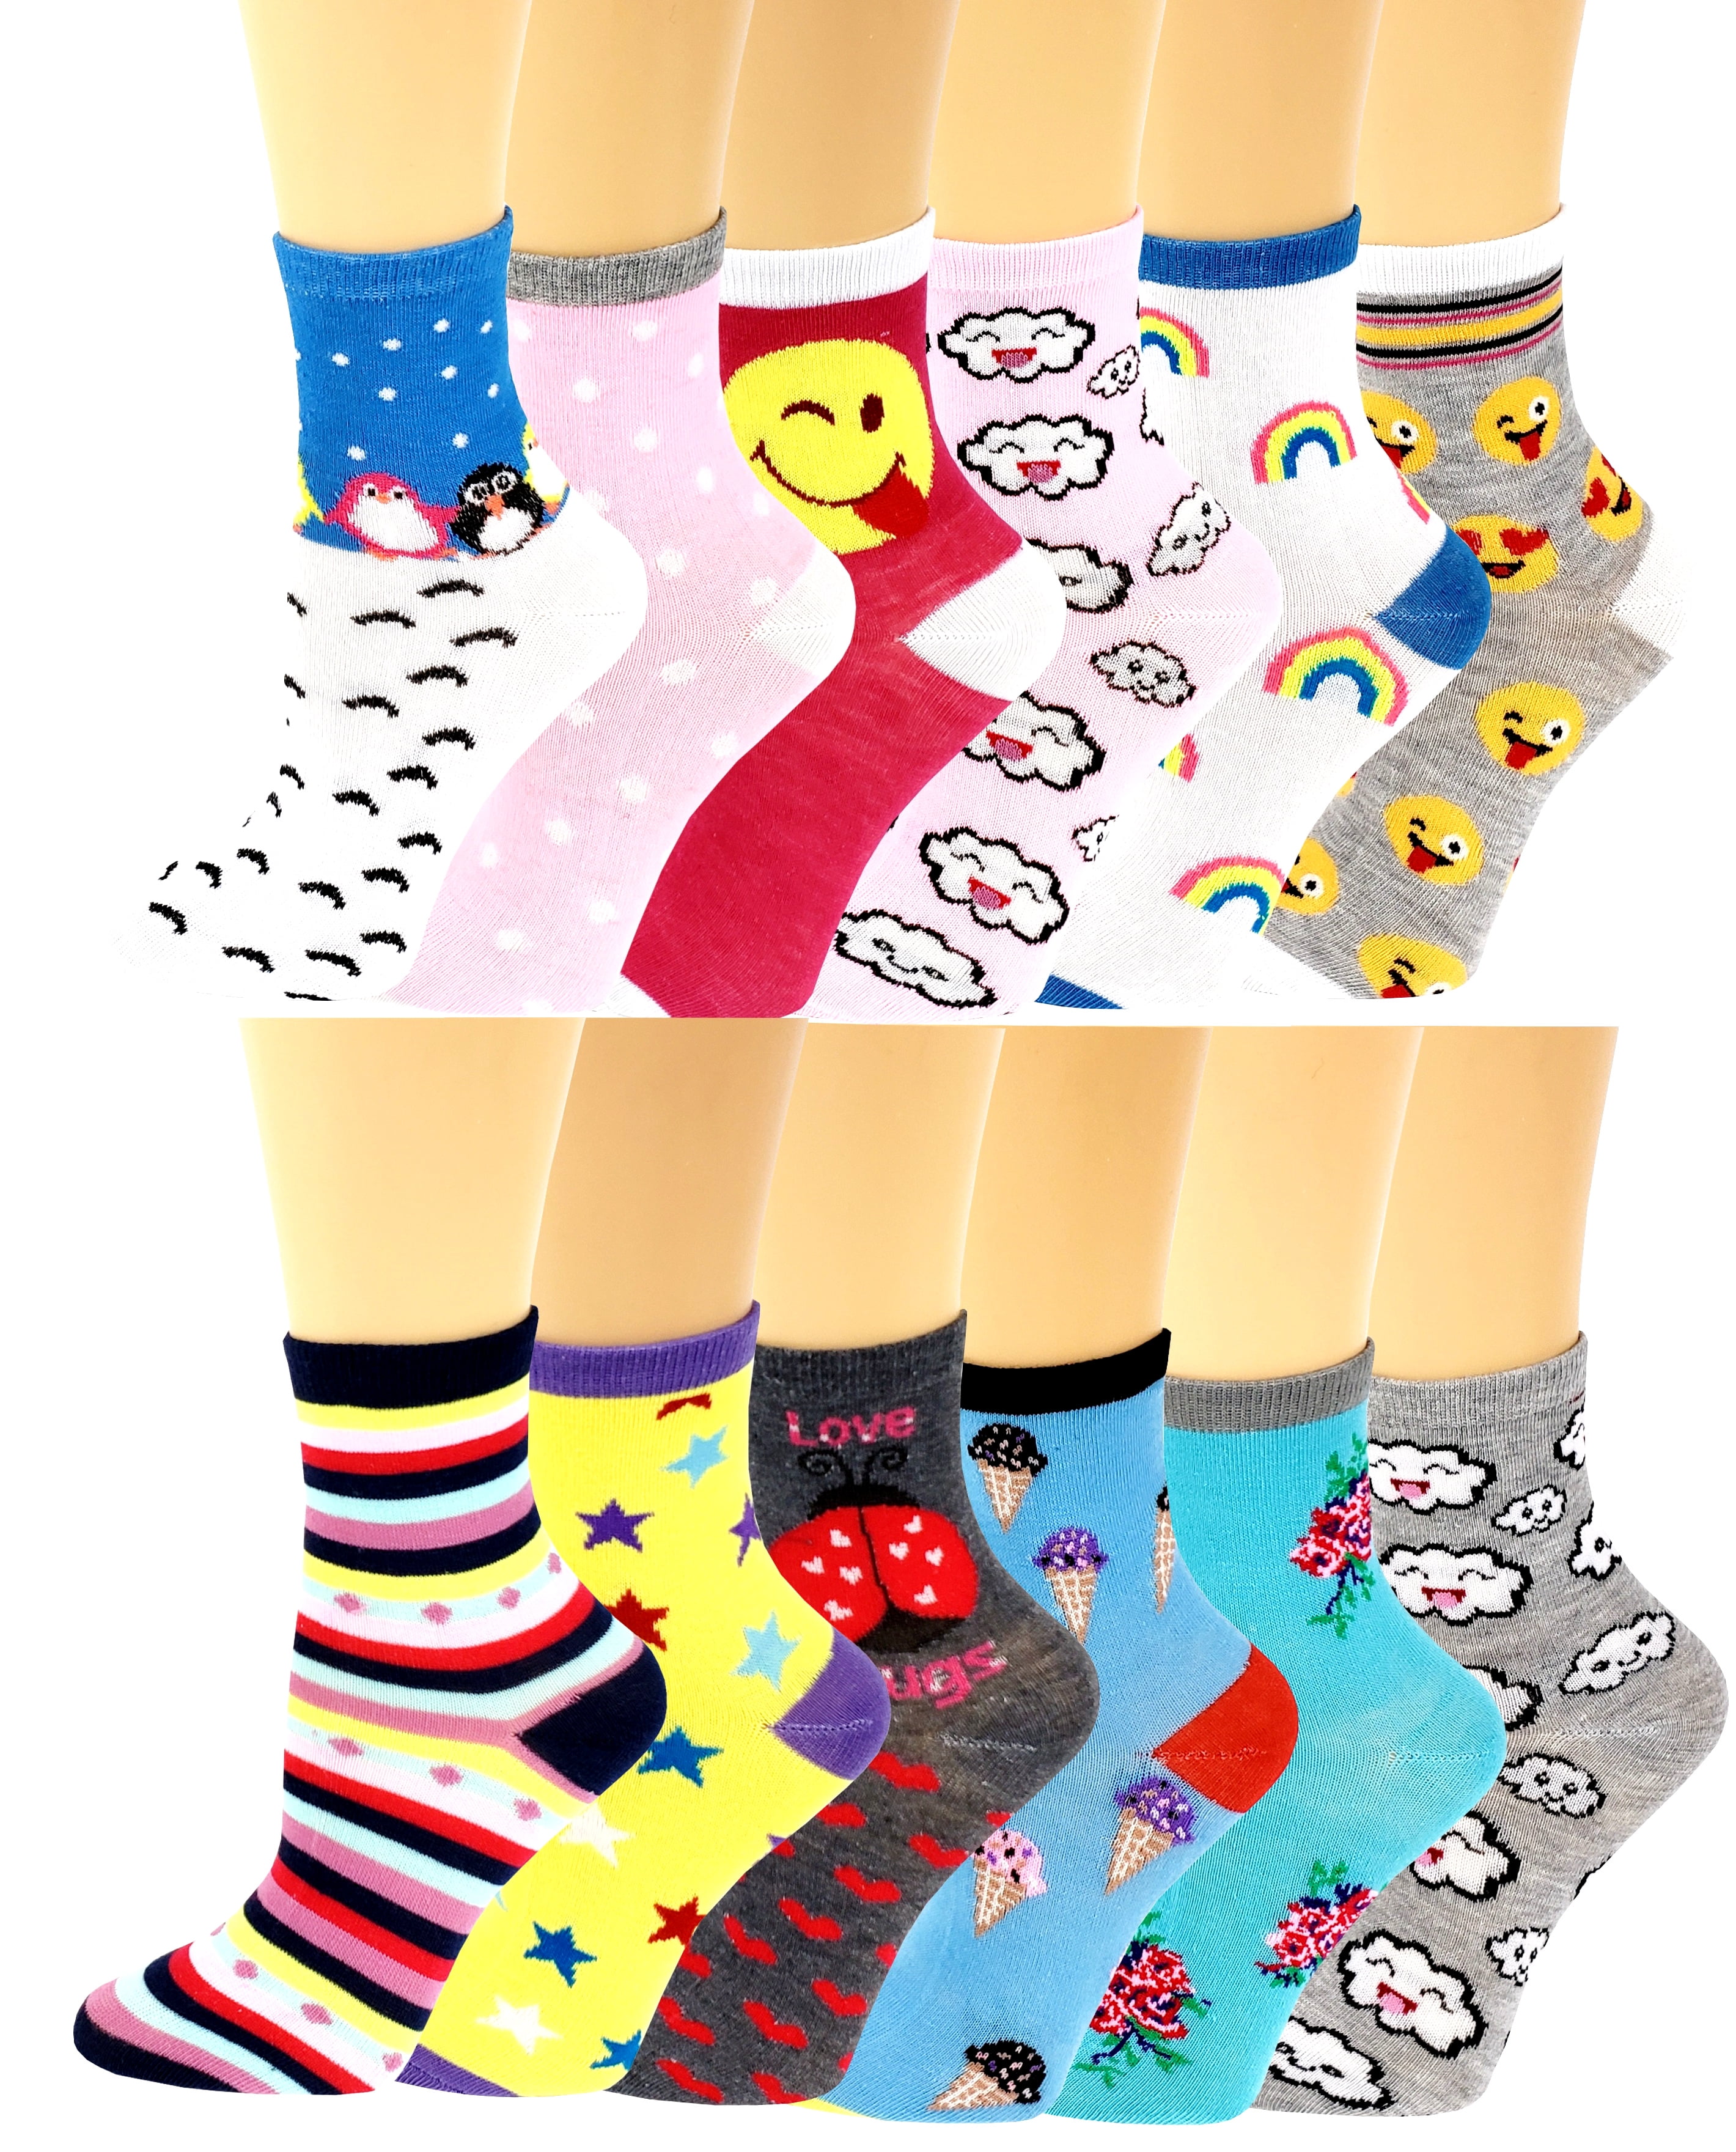 COTTON DAY Kids Girls Fun Novelty Design Socks Bright Colors 